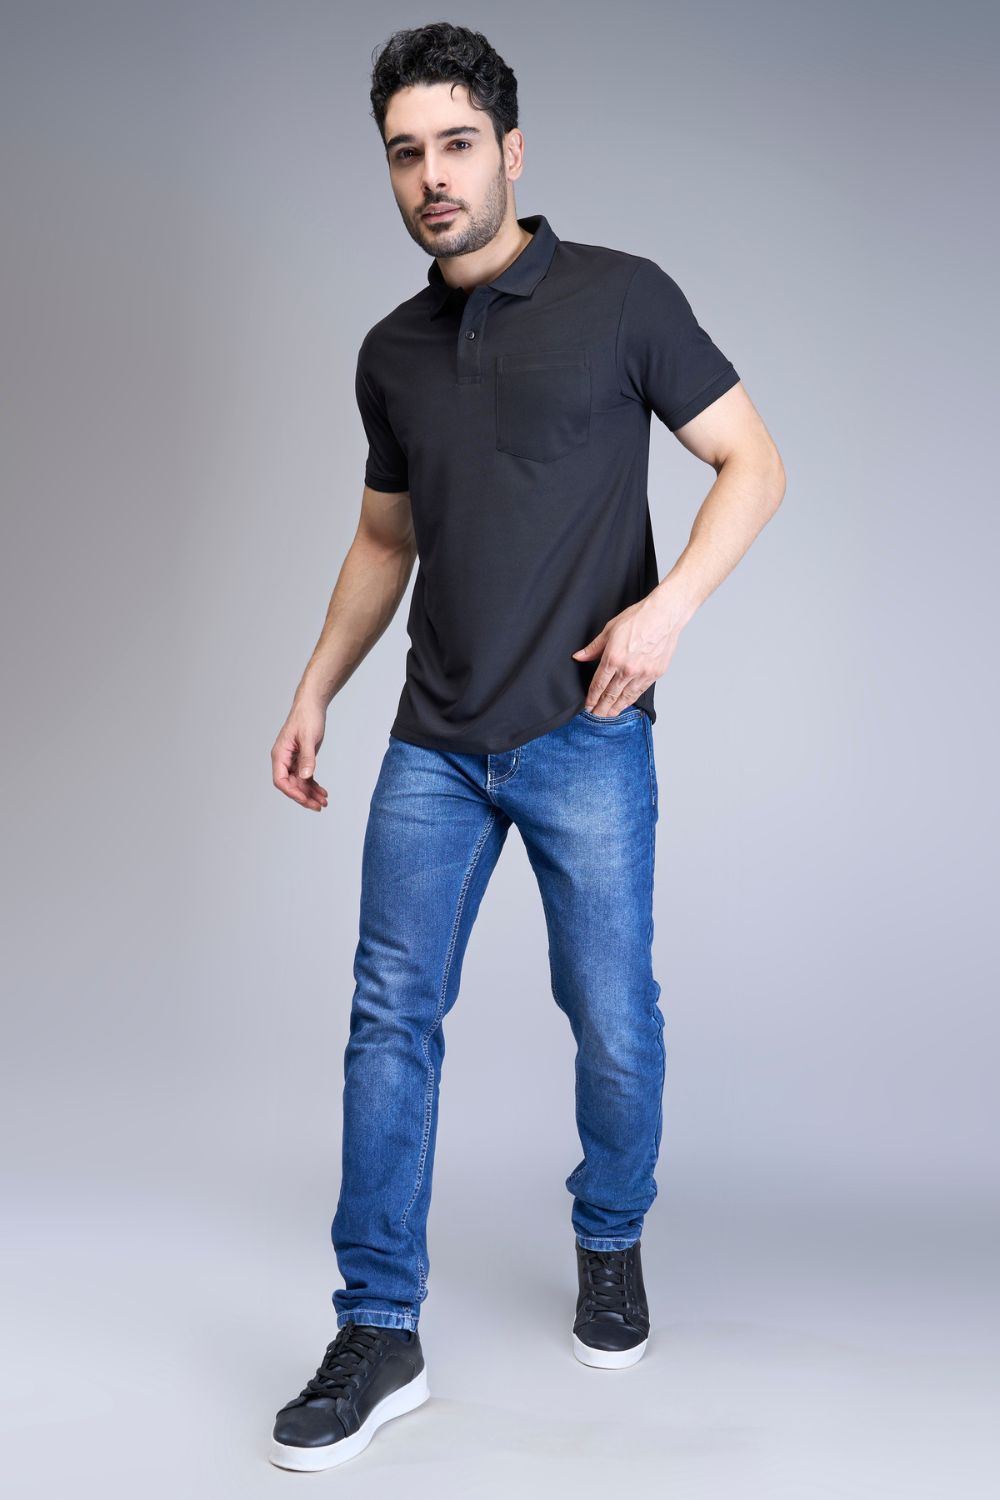 Black Smart Tech Pocket + Polo T-shirts Maxzone Clothing   